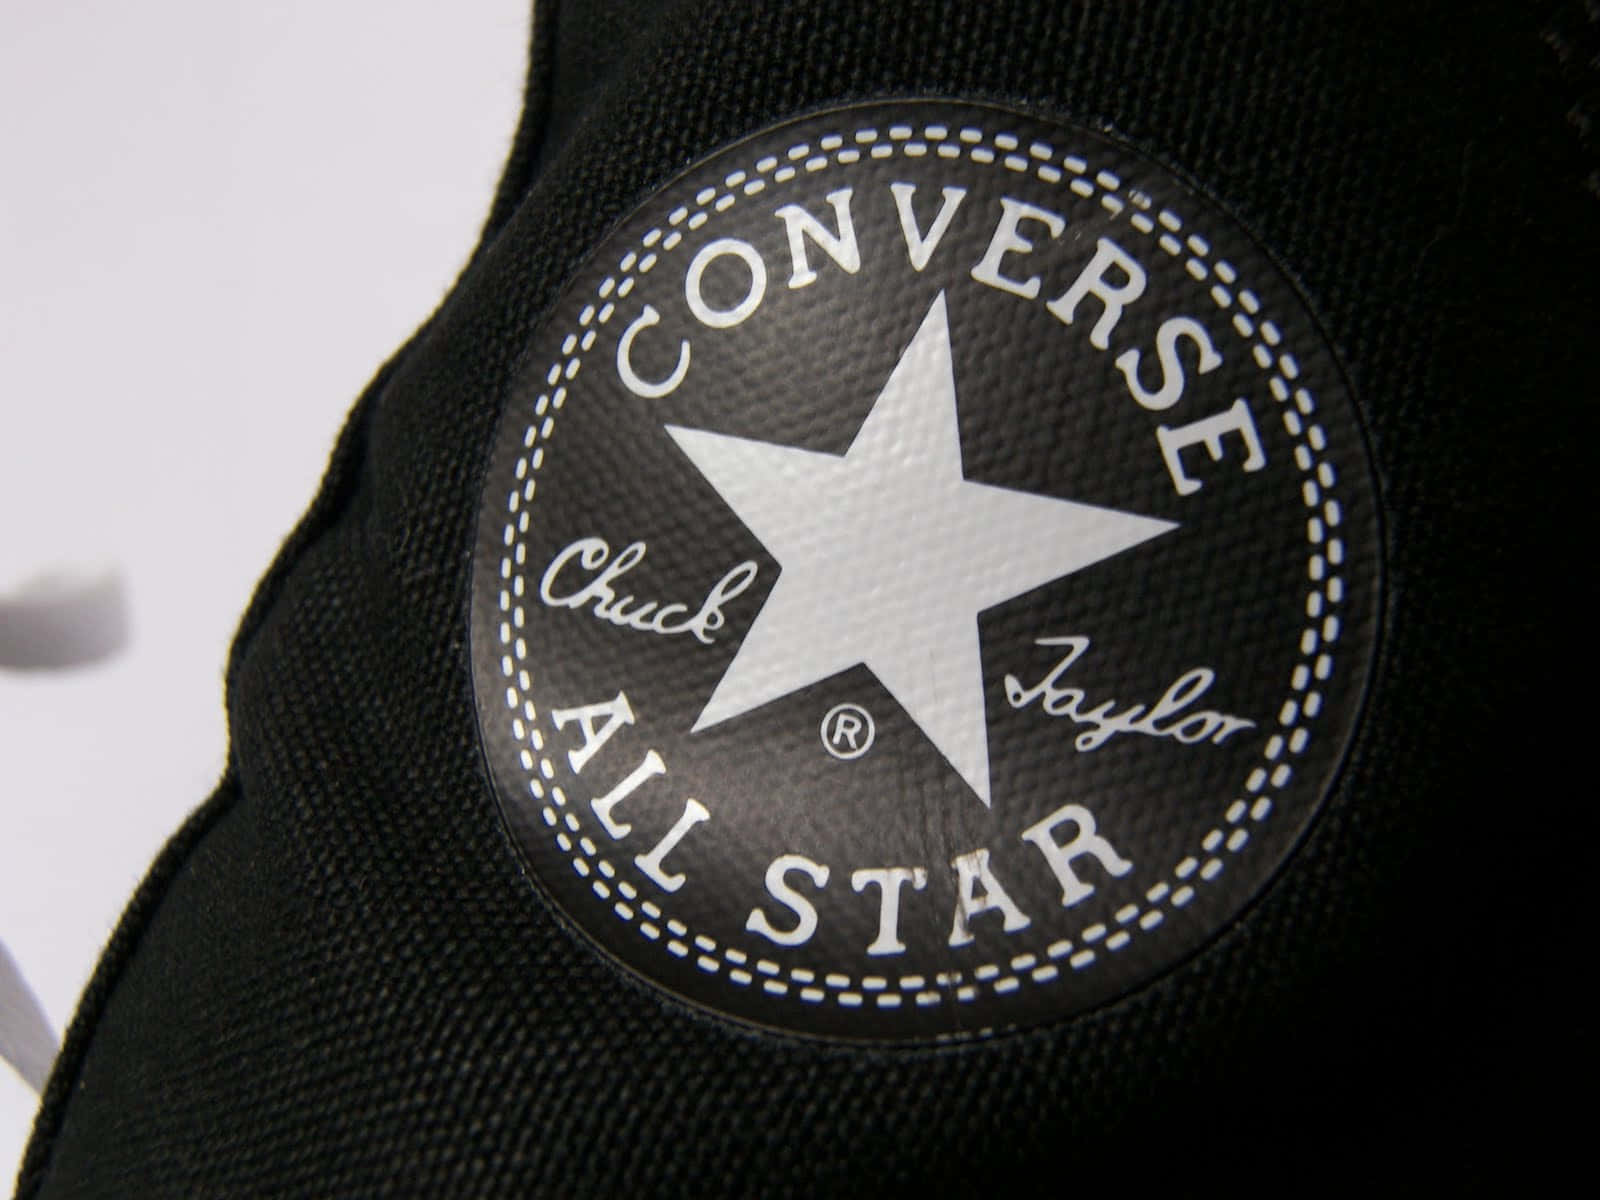 Bakgrundmed Converse-logotypen